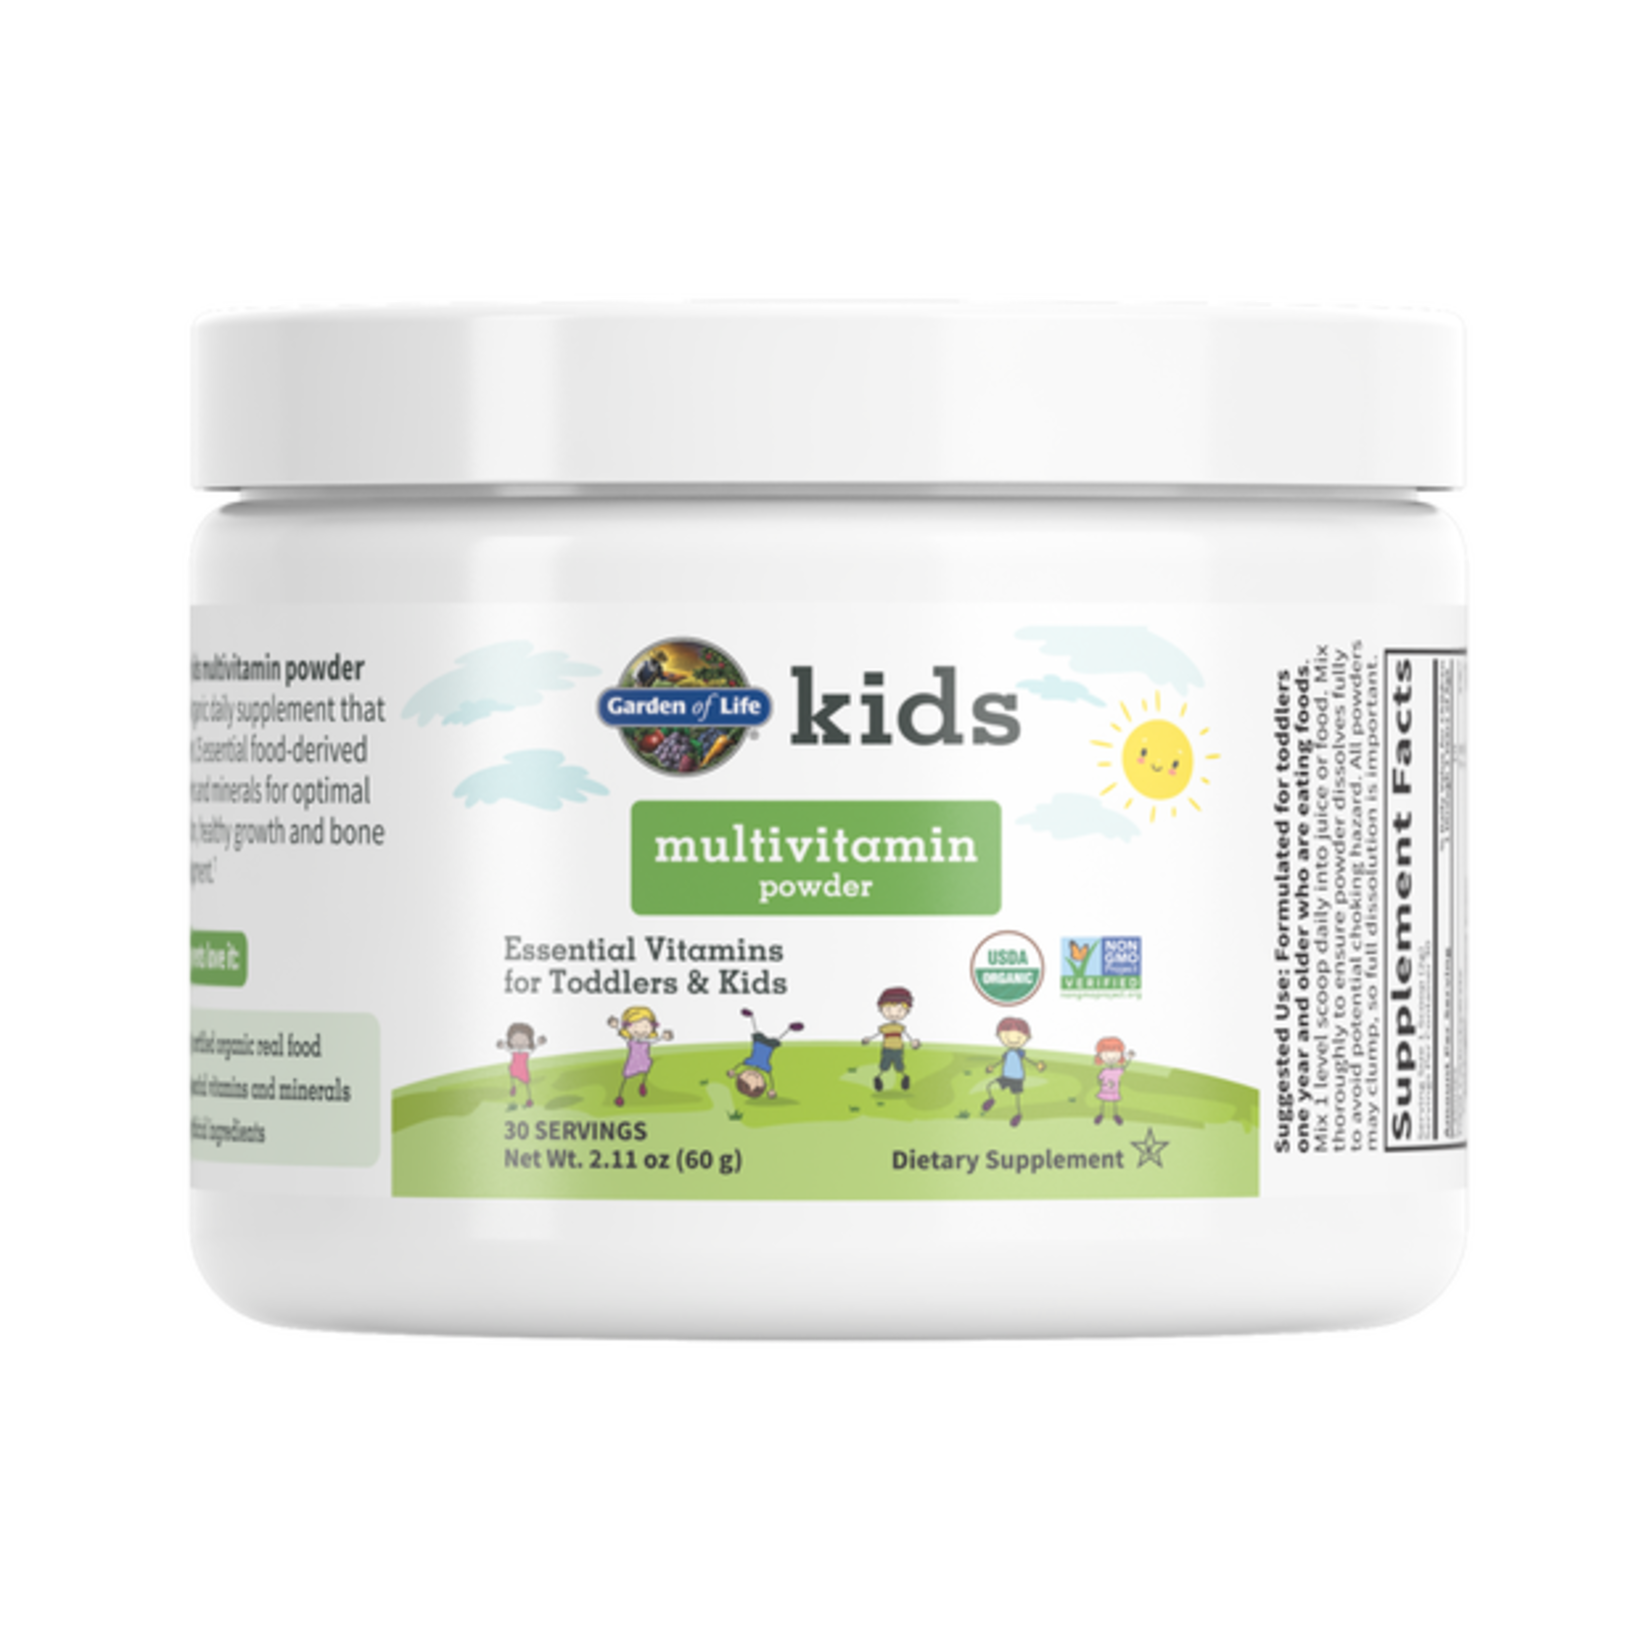 Garden of Life Garden of Life - Kids Multivitamin Powder - 60 grams